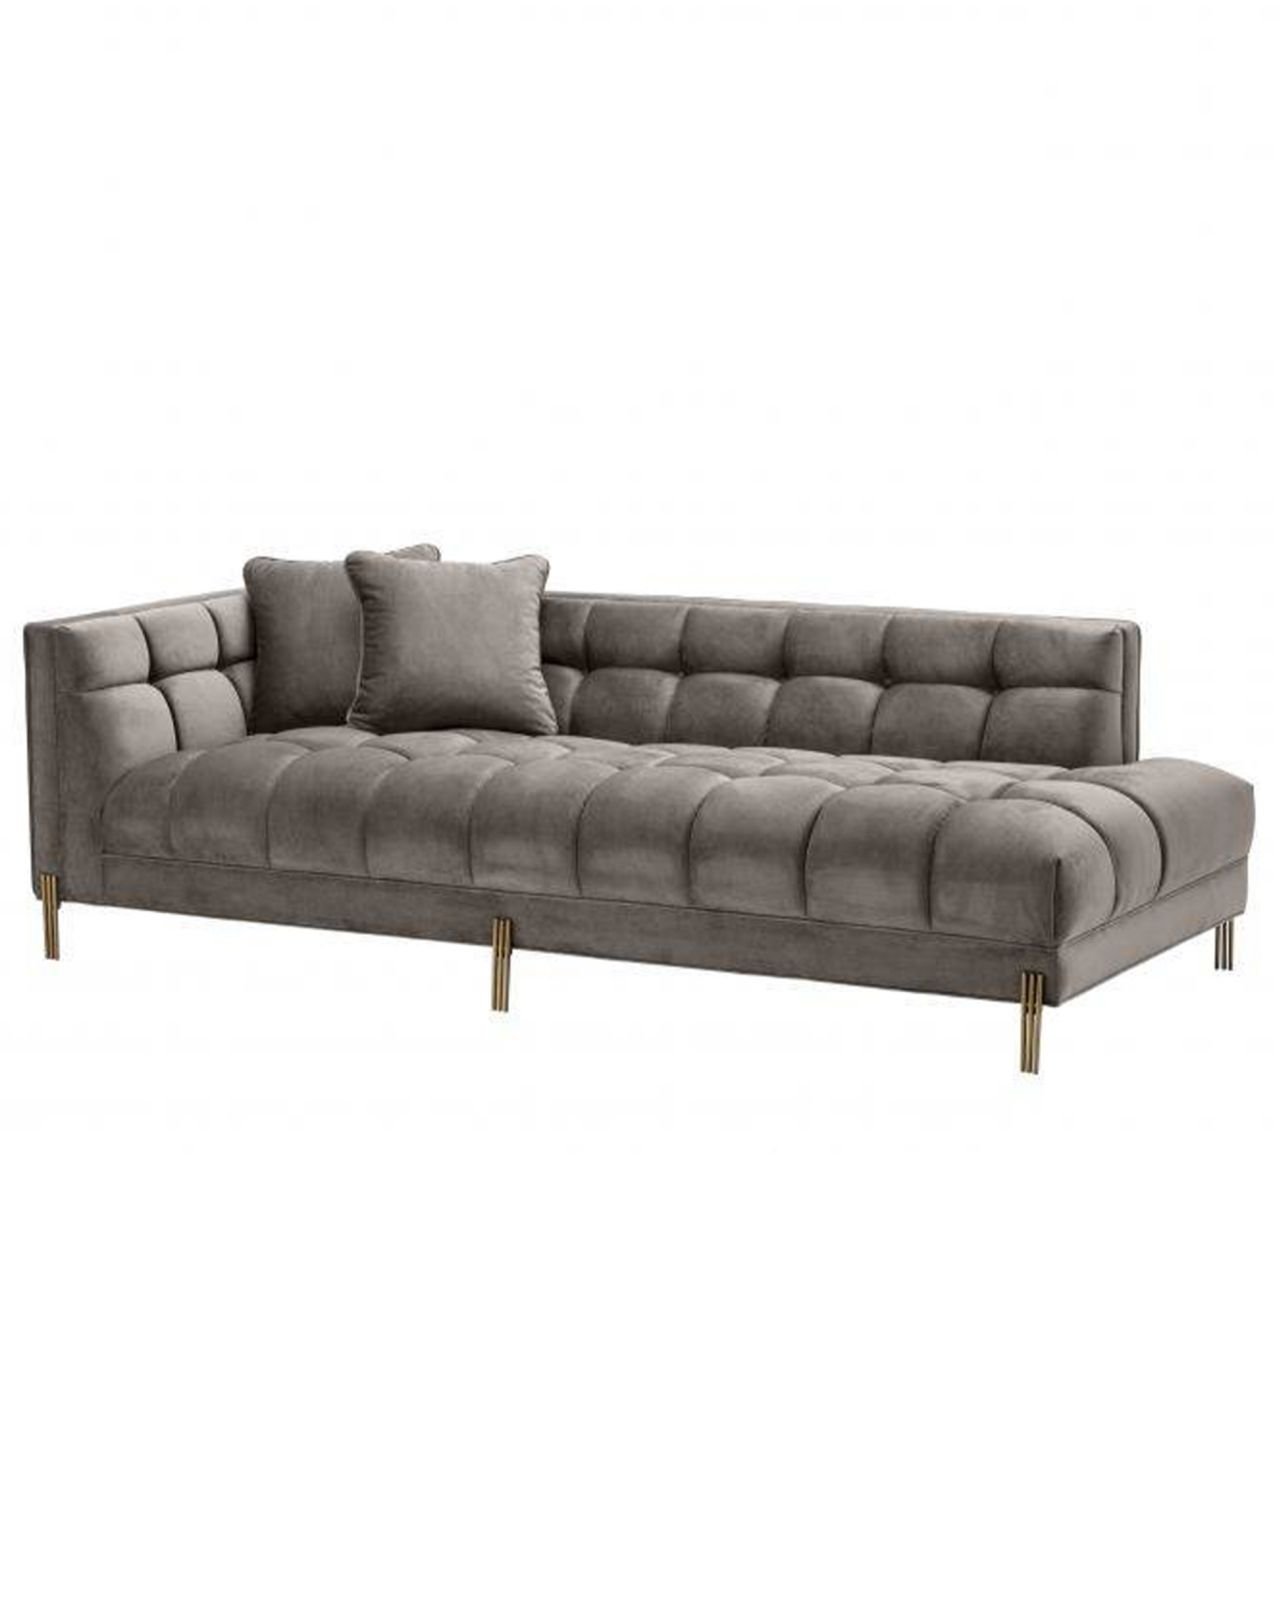 Sienna sofa savona grey left